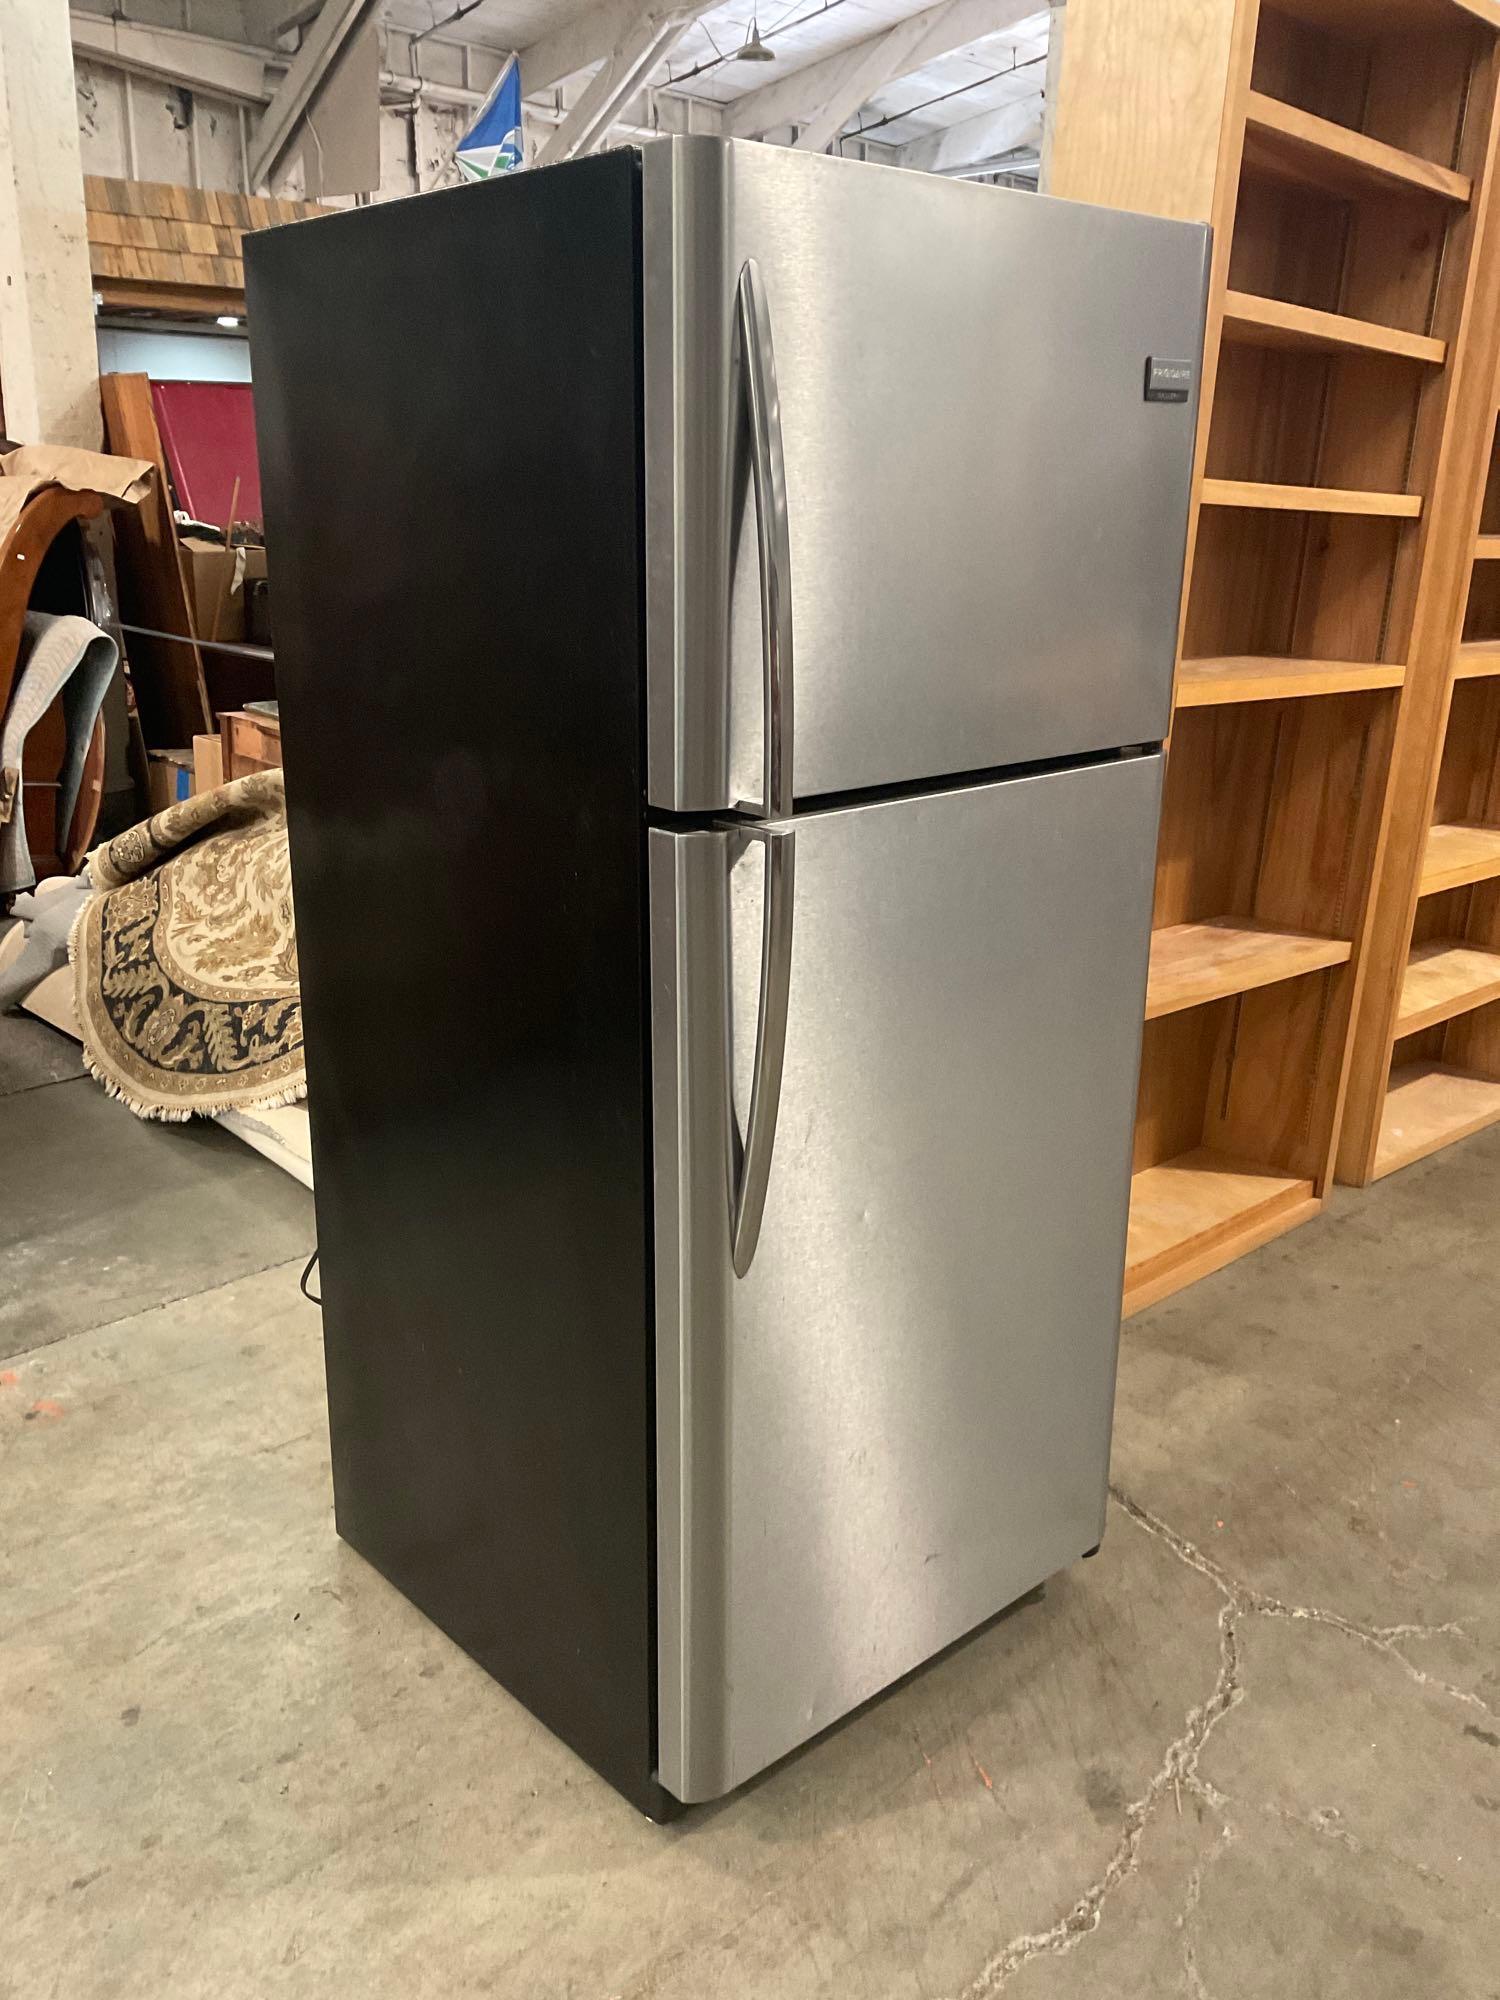 FRIGIDAIRE upright refrigerator/ freezer combo. Model JGHT2137NF4.